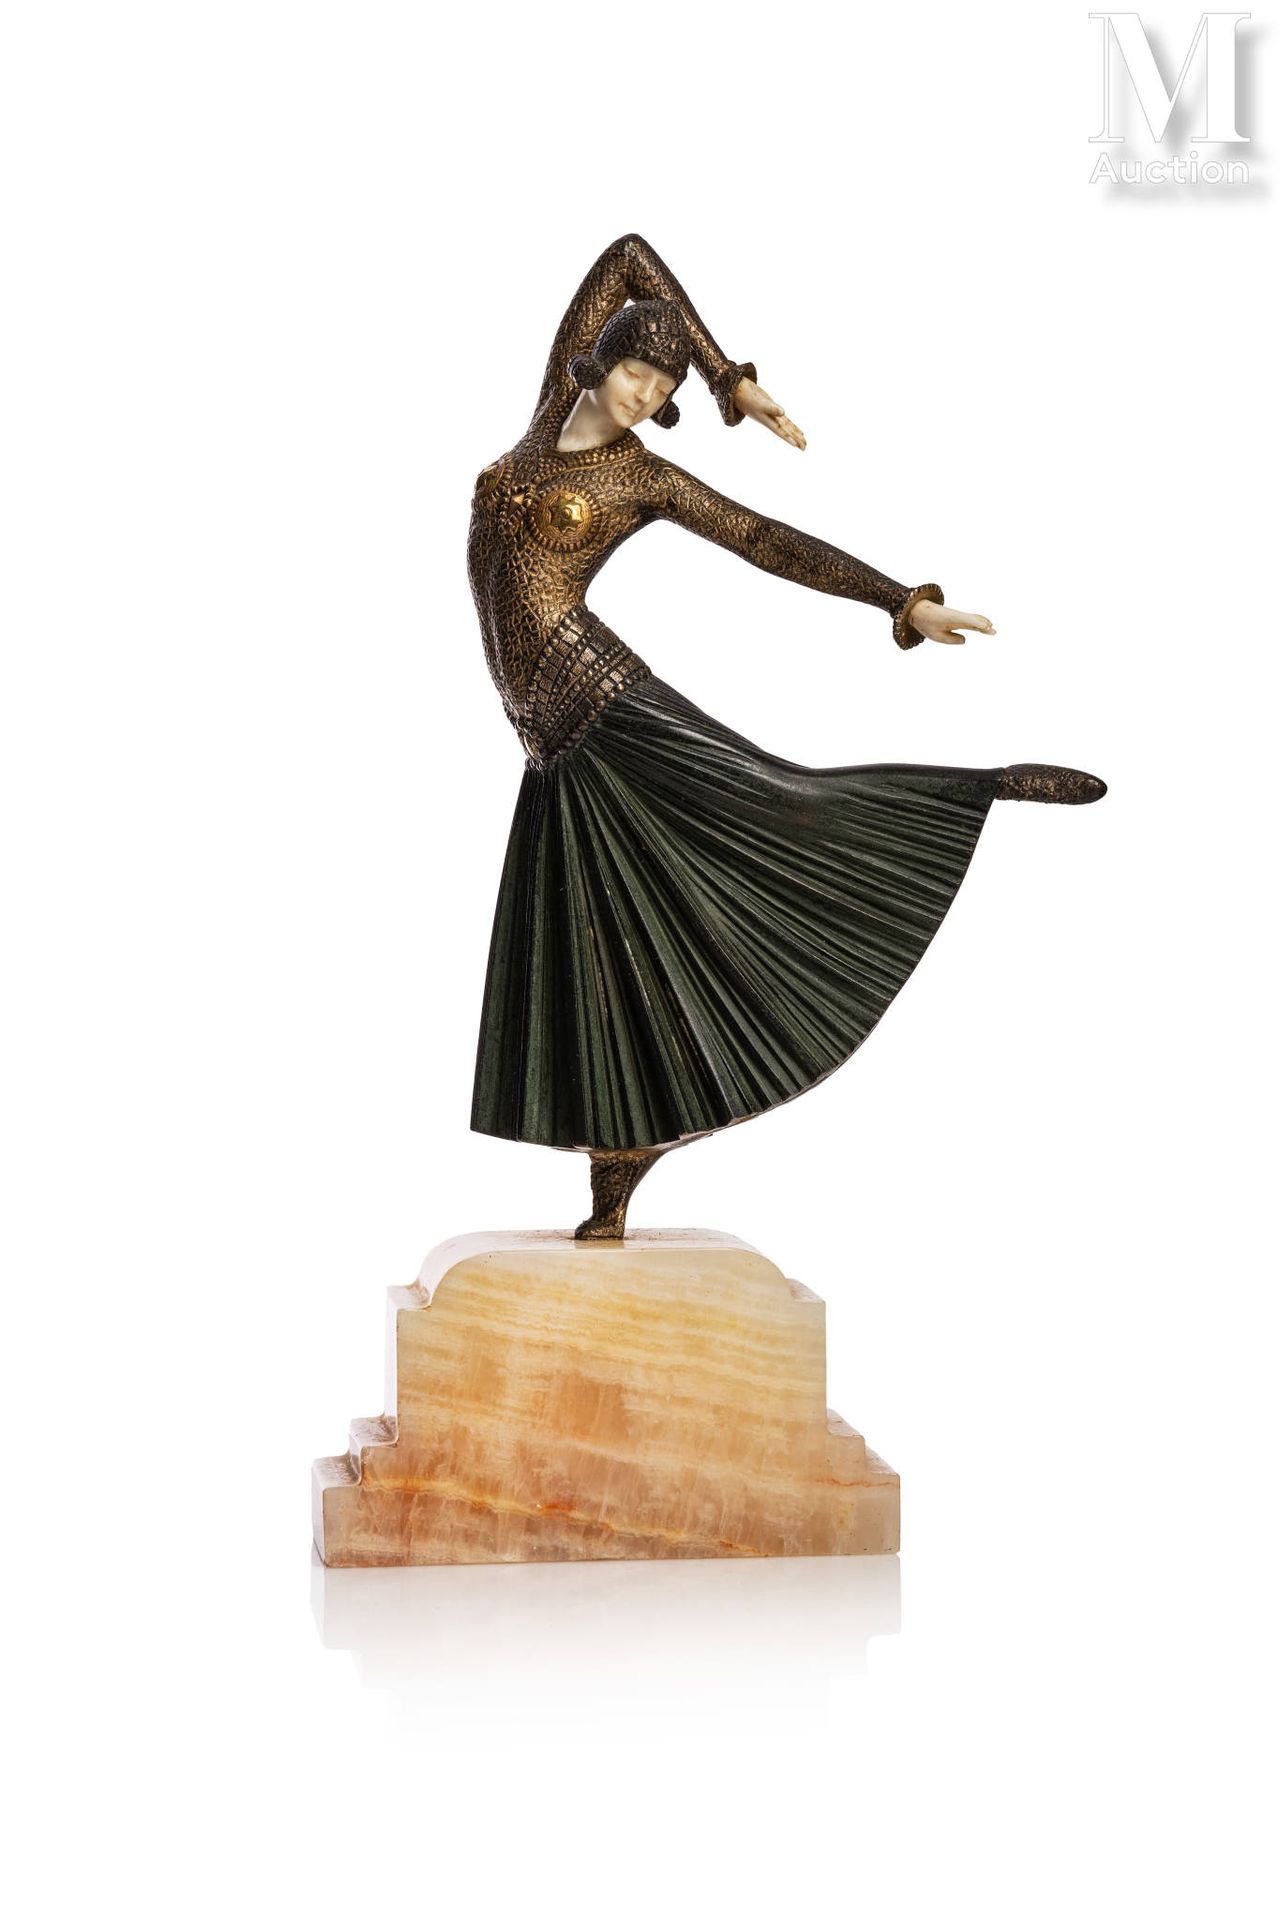 Demeter Haralamb CHIPARUS (1886-1947) "Ayouta"



A chryselephantine sculpture i&hellip;